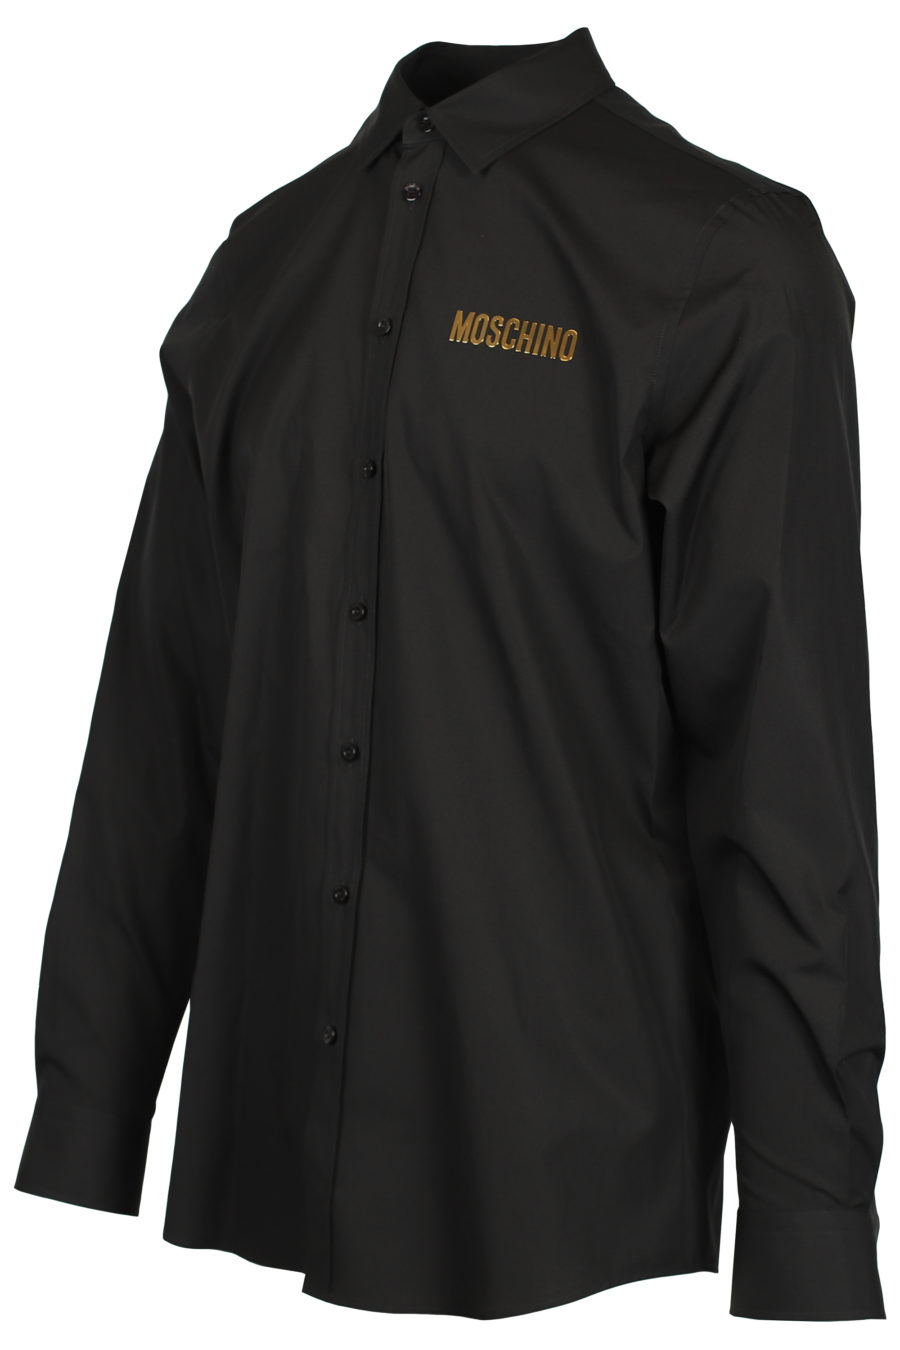 Black shirt with gold logo - IMG 2570